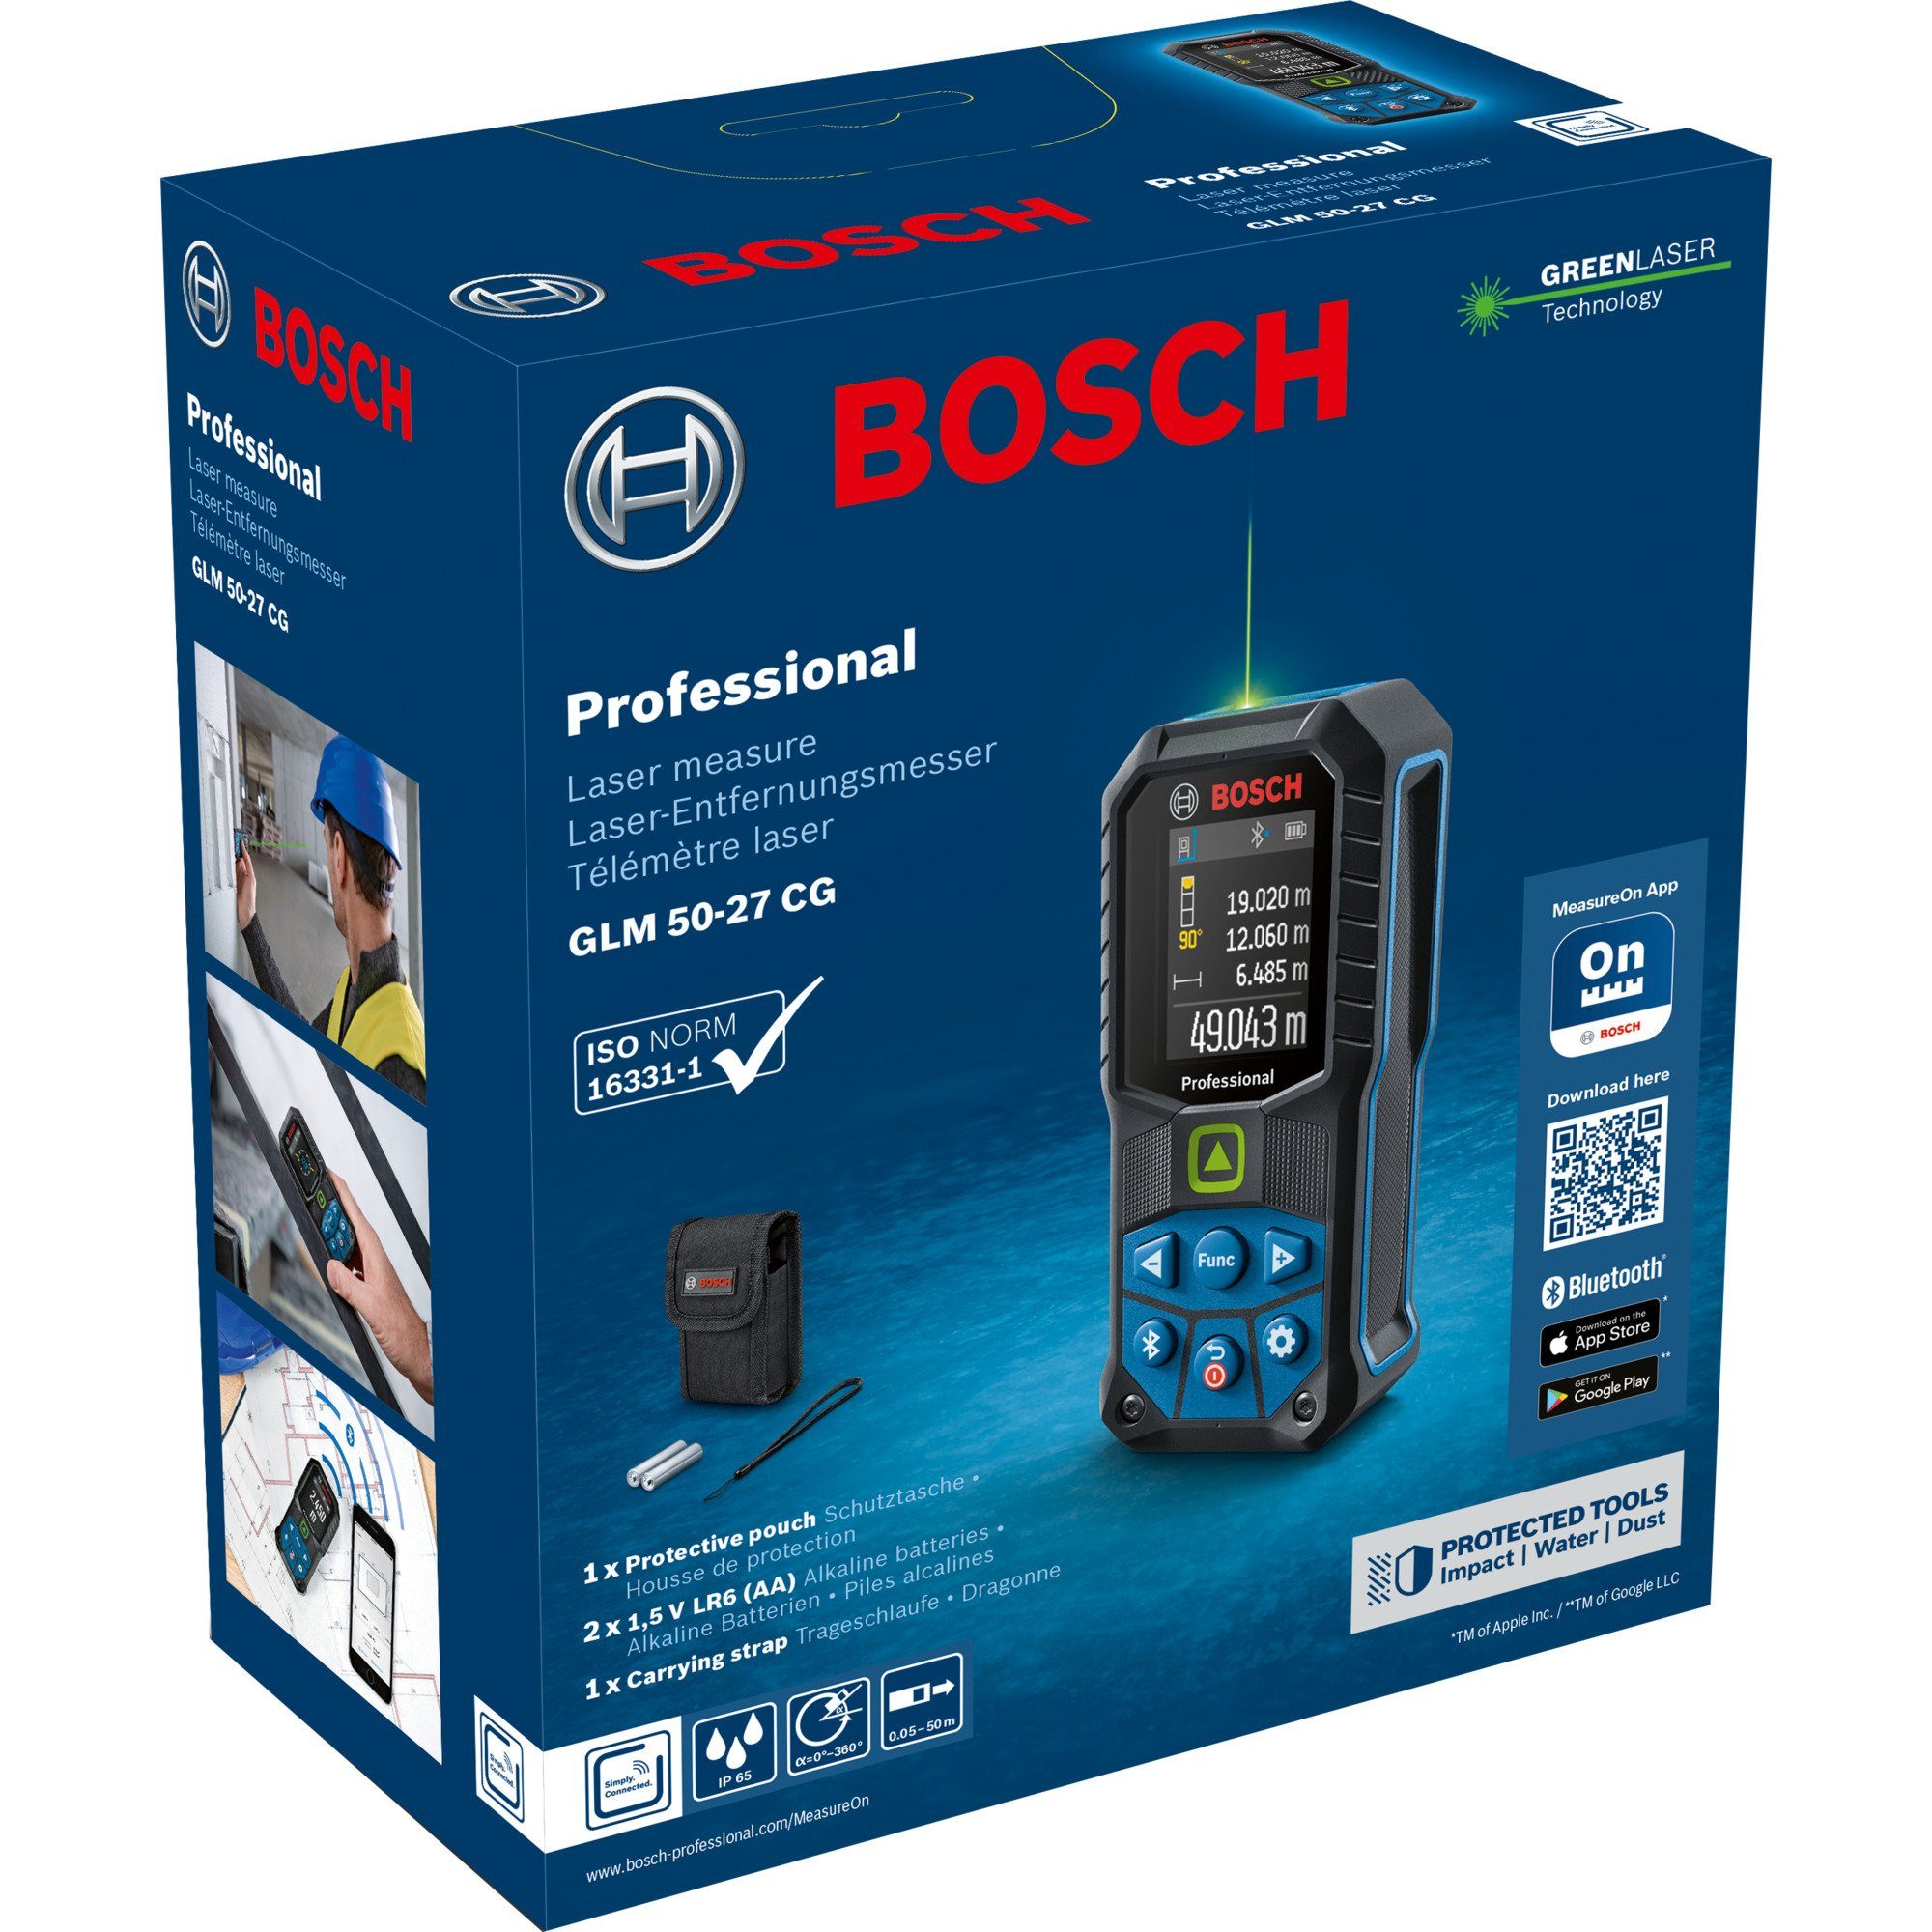 BOSCH Bosch Akku-Multifunktionswerkzeug GLM Laser-Entfernungsmesser Professional